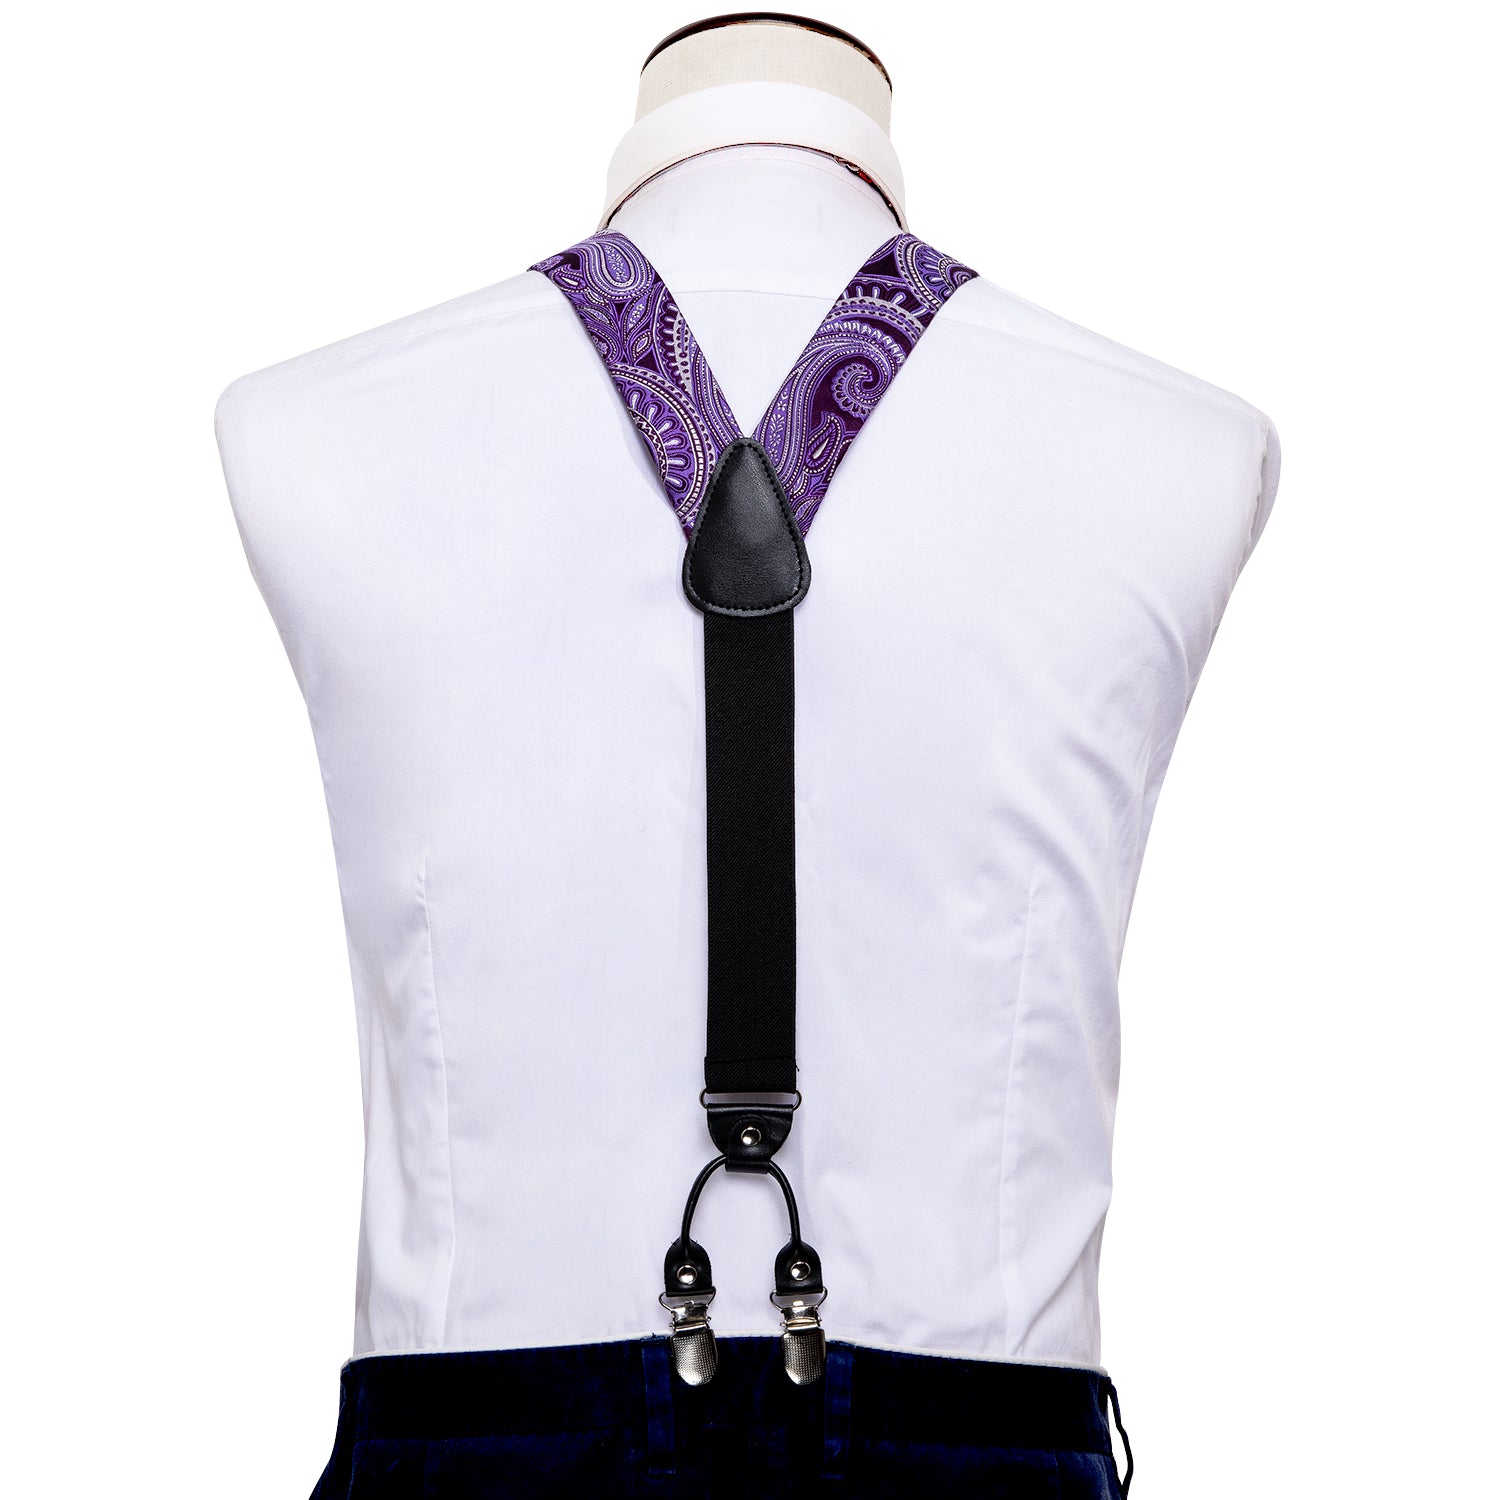 Barry.wang Purple Tie Paisley Y Back Adjustable Suspenders Bow Tie Set